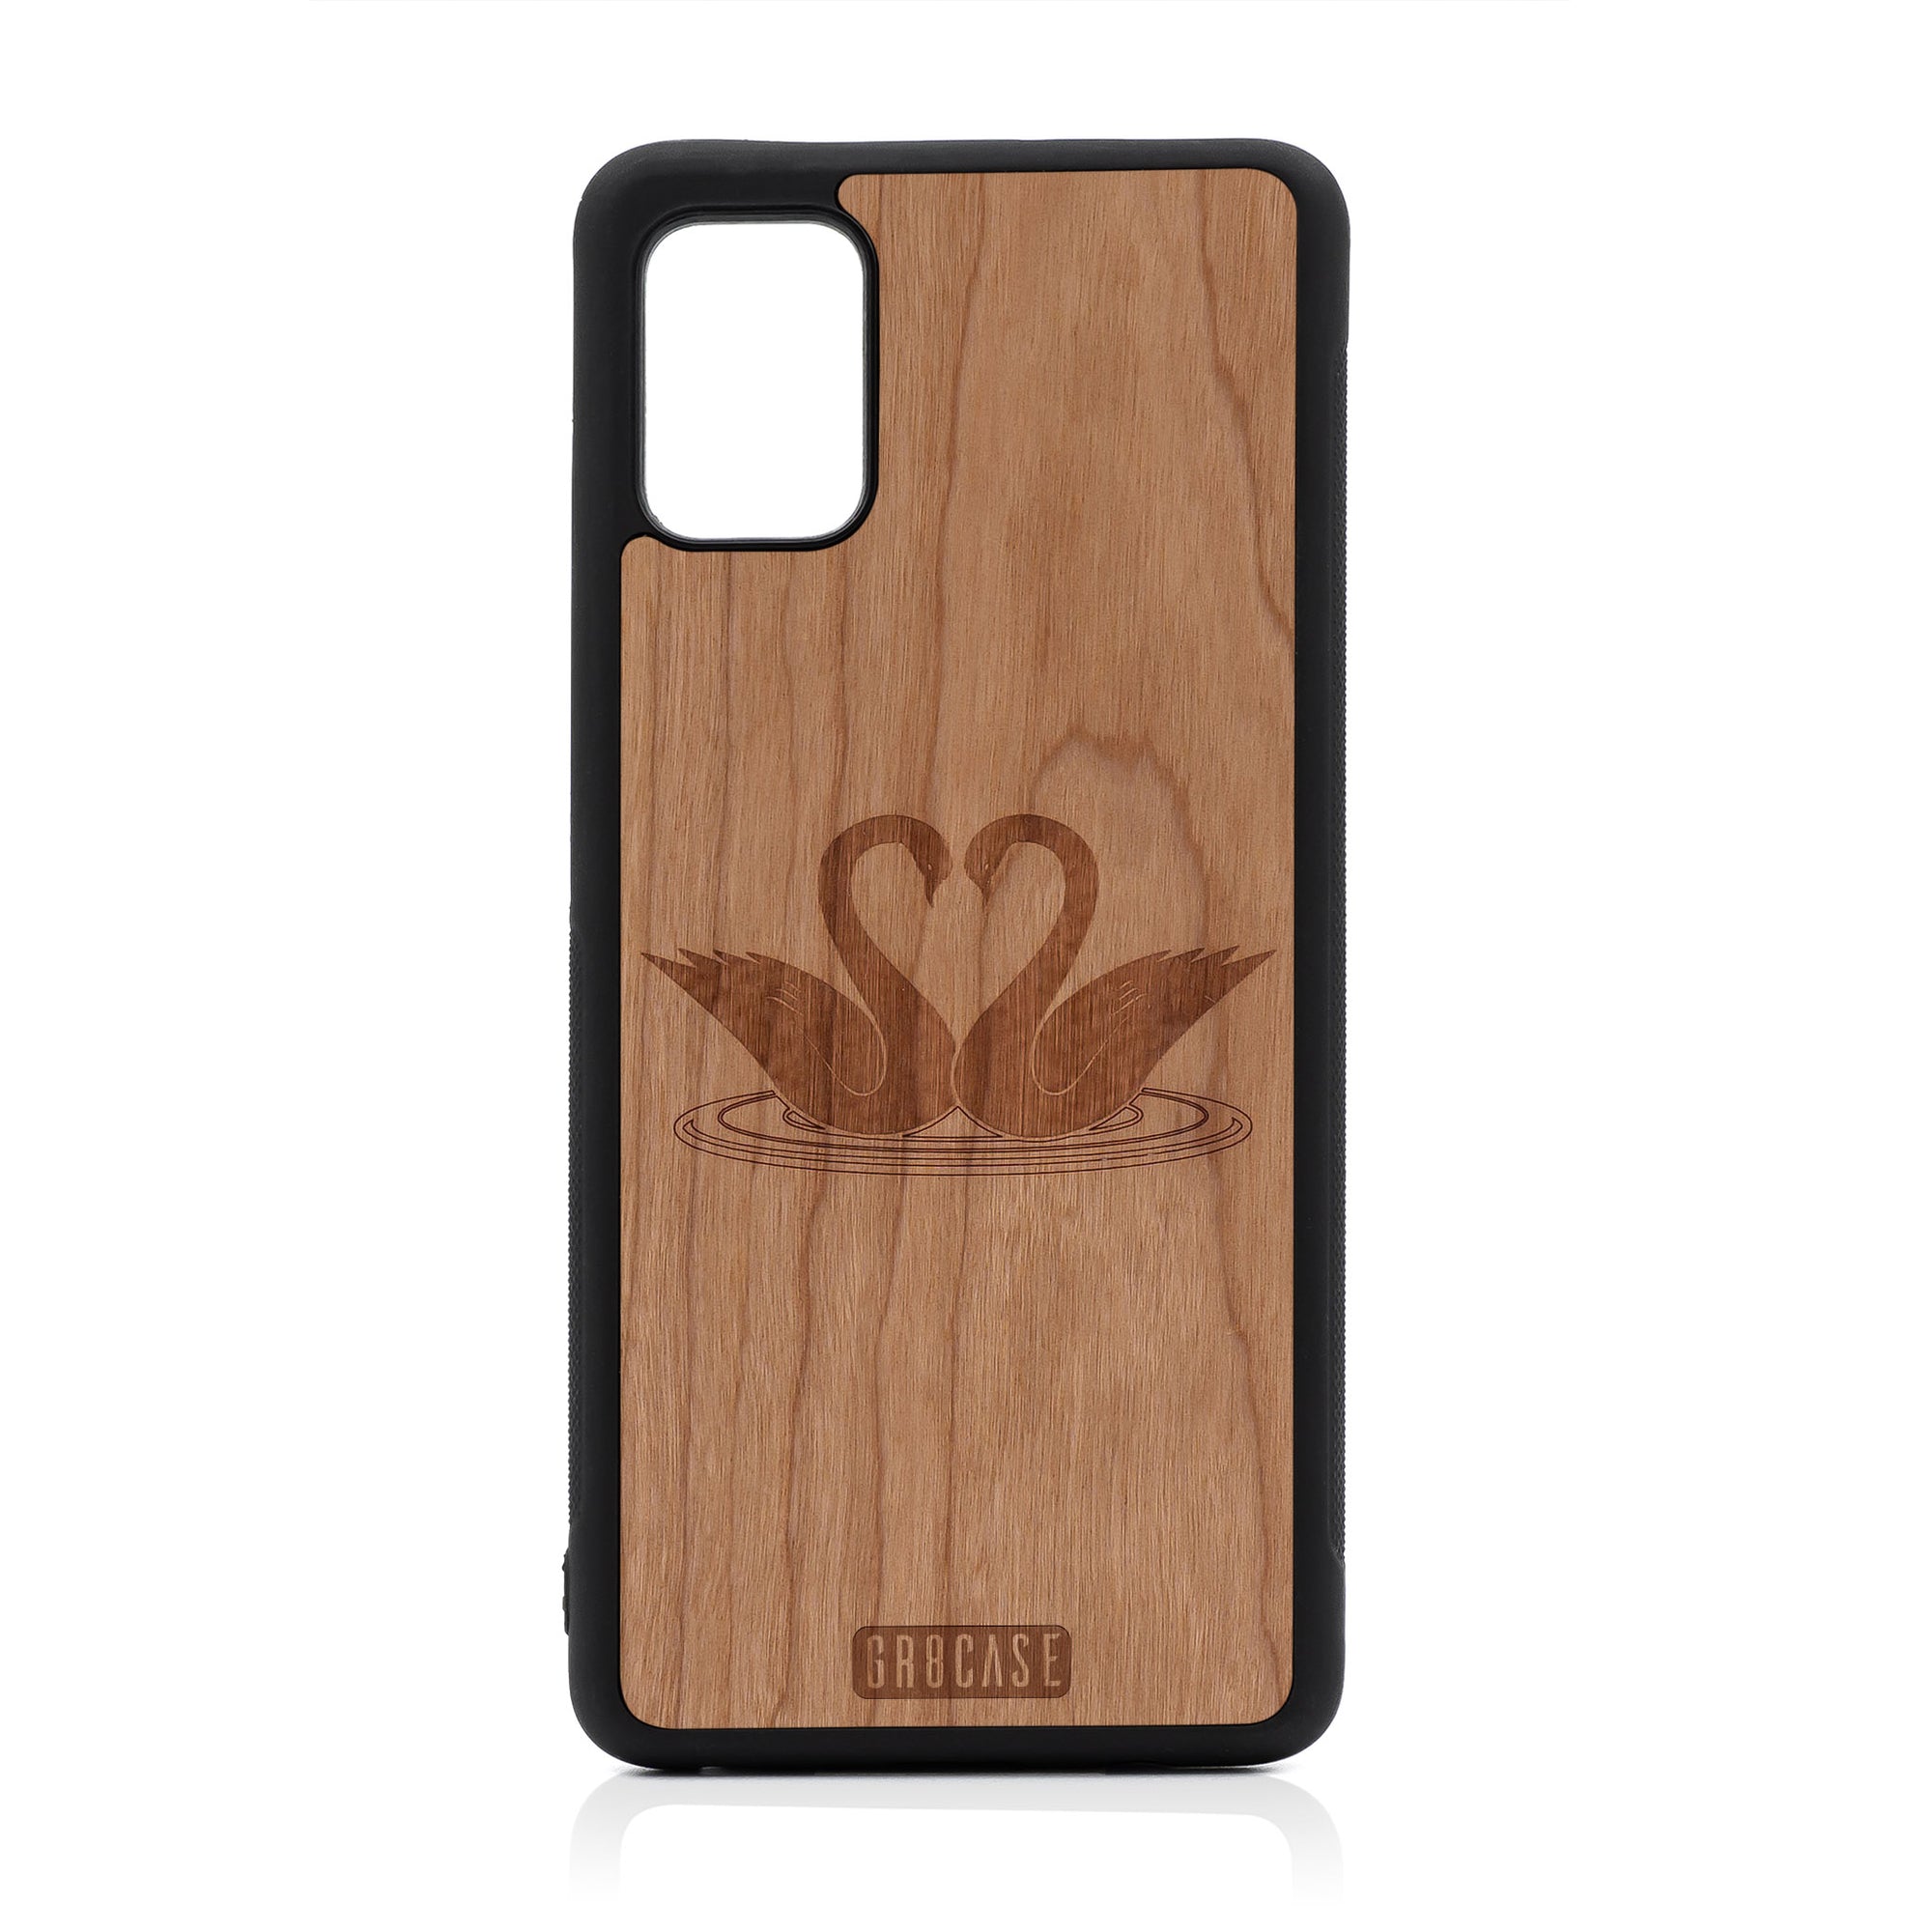 Swans Design Wood Case For Samsung Galaxy A51